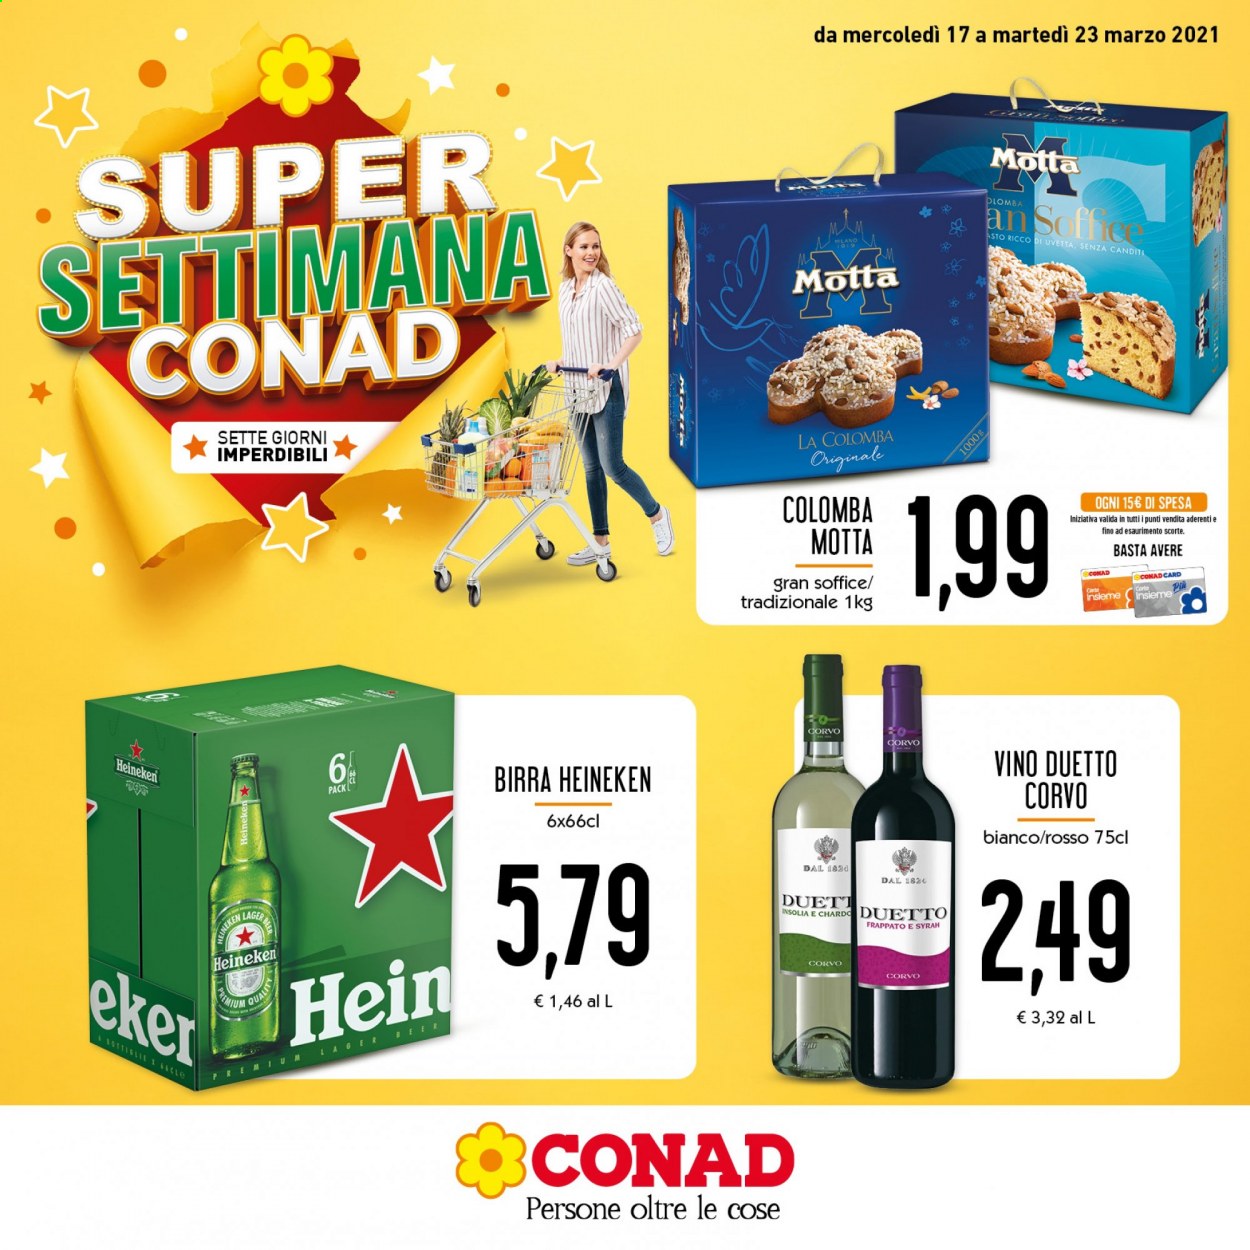 thumbnail - Volantino Conad - 17/3/2021 - 23/3/2021 - Prodotti in offerta - Heineken, birra, birra tipo lager, colomba, Motta, Corvo, vino. Pagina 1.